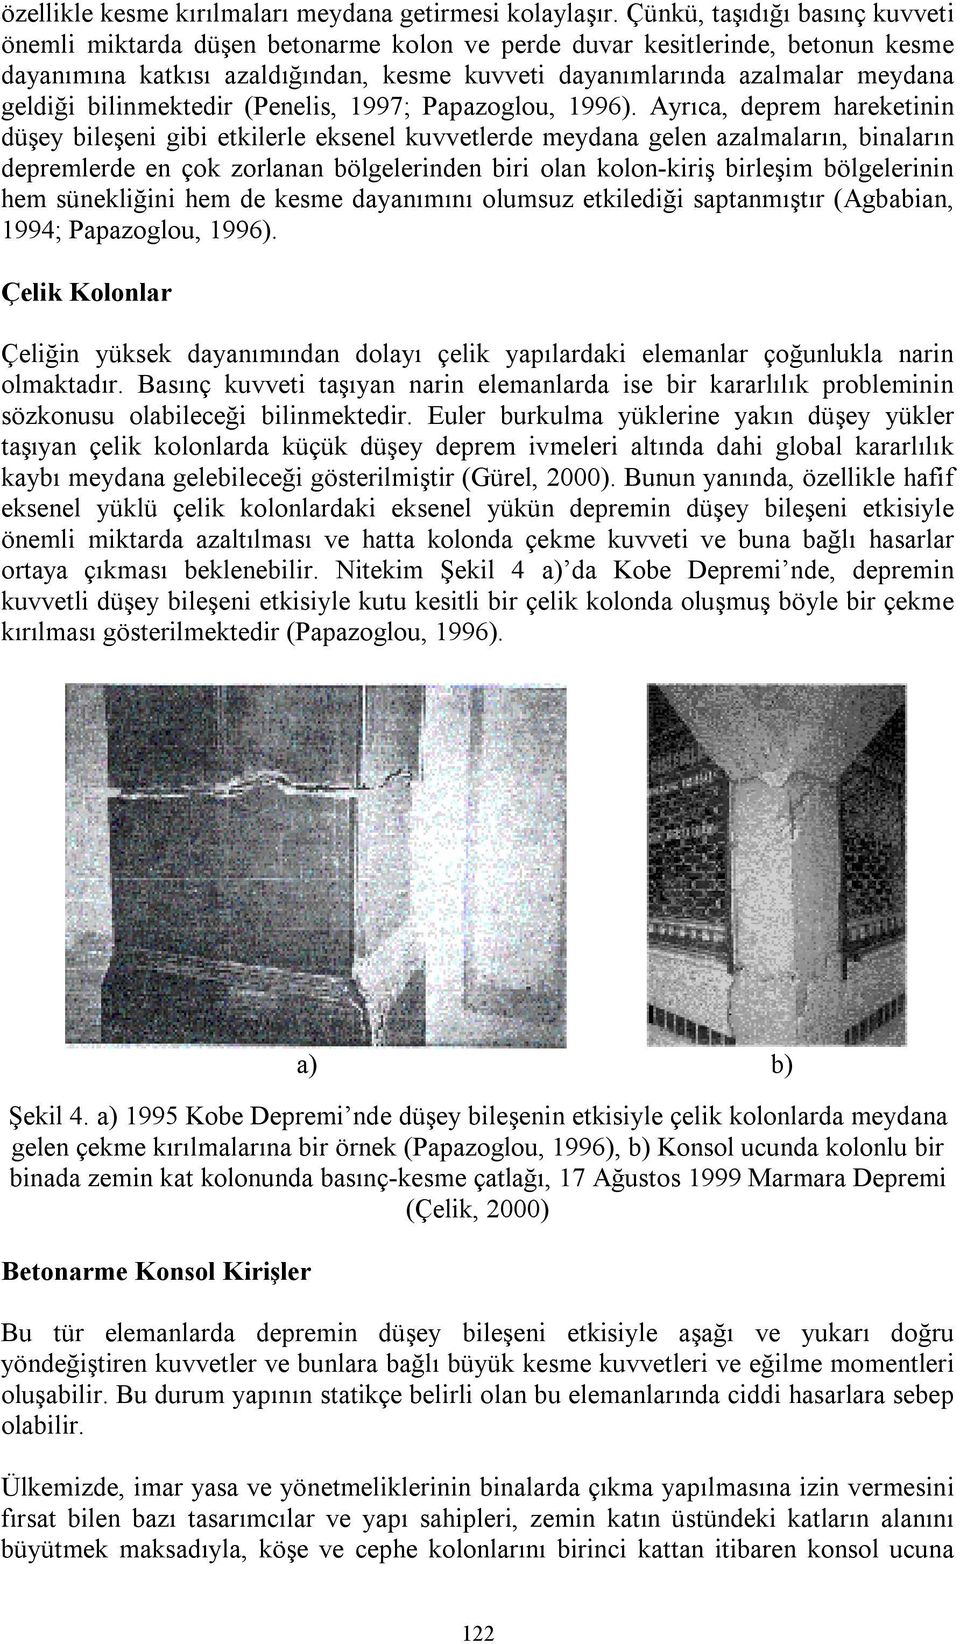 bilinmektedir (Penelis, 1997; Papazoglou, 1996).